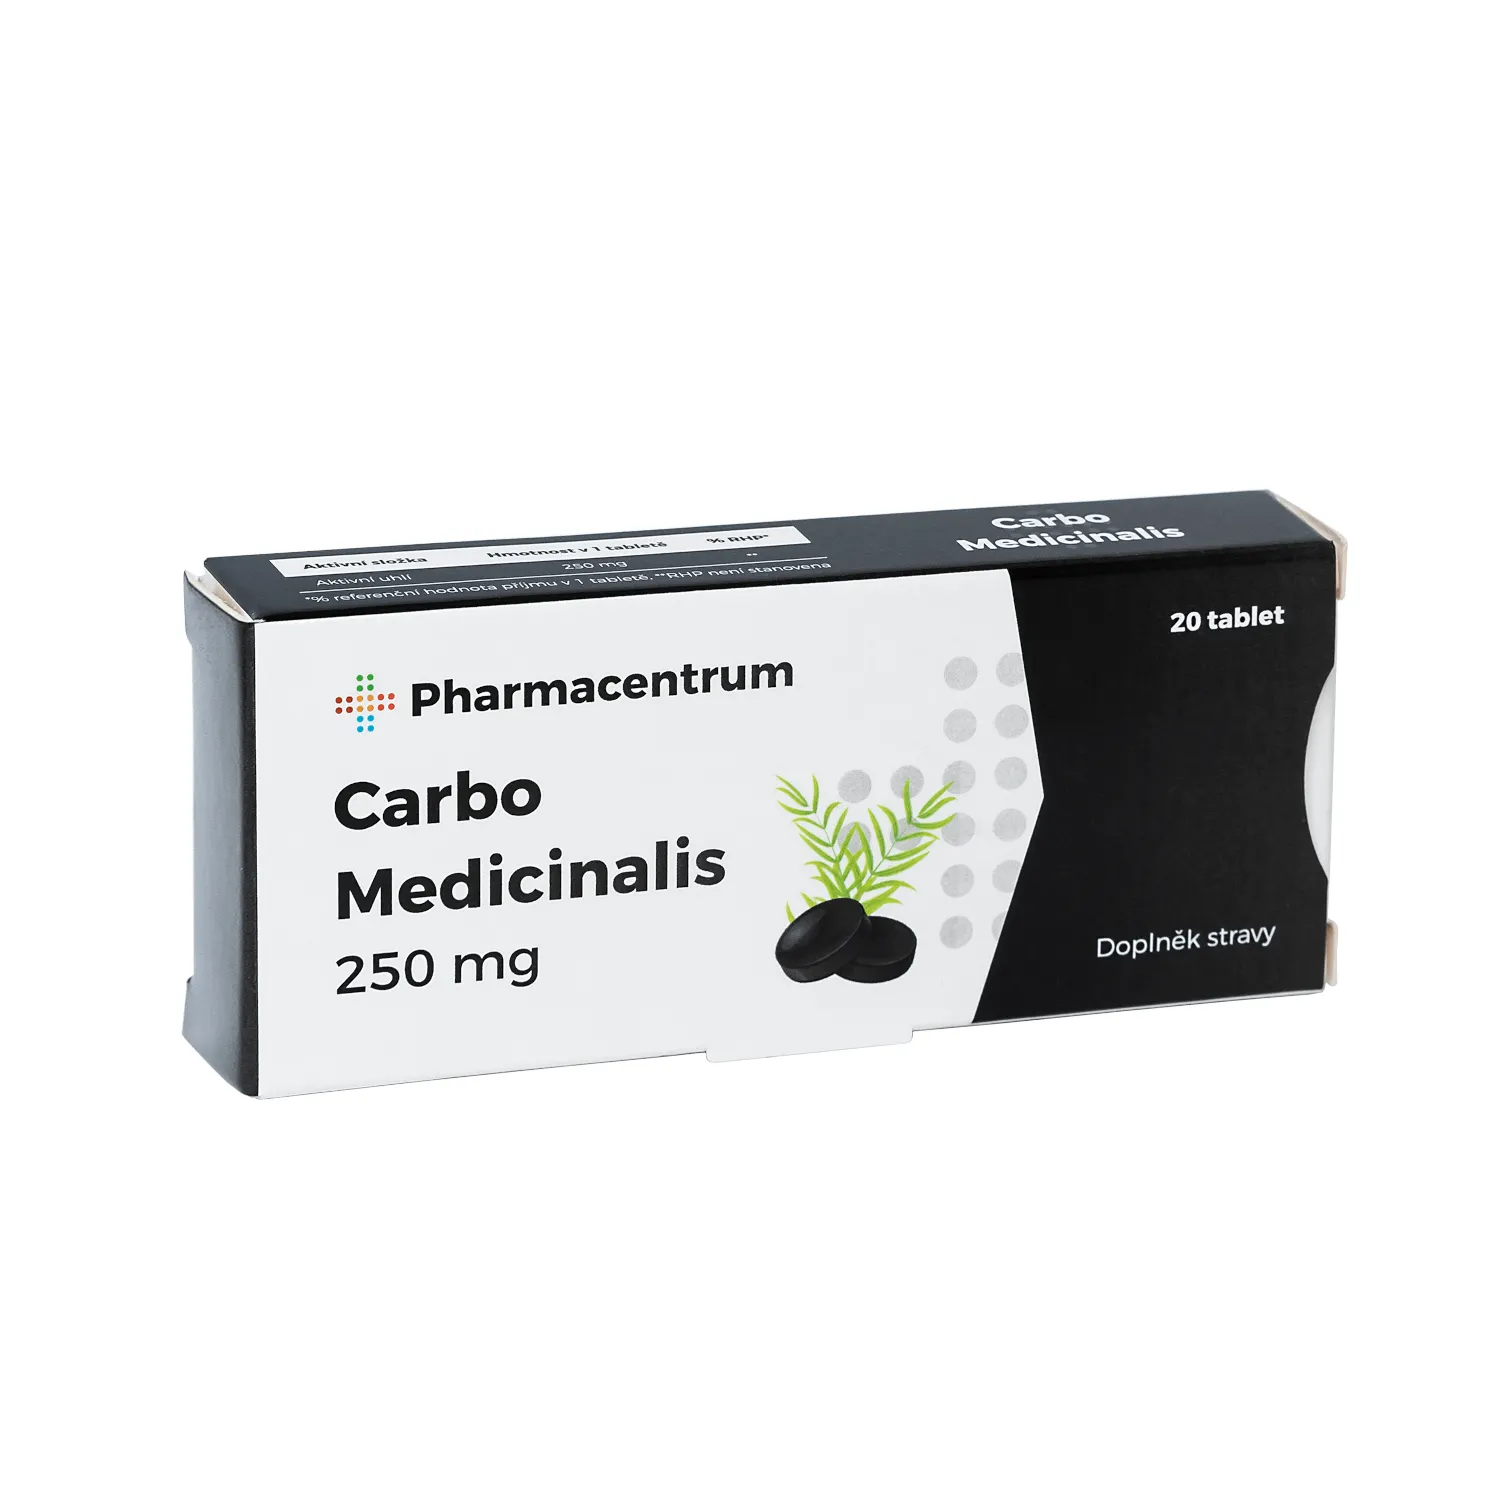 Pharmacentrum Carbo Medicinalis 20 tablet